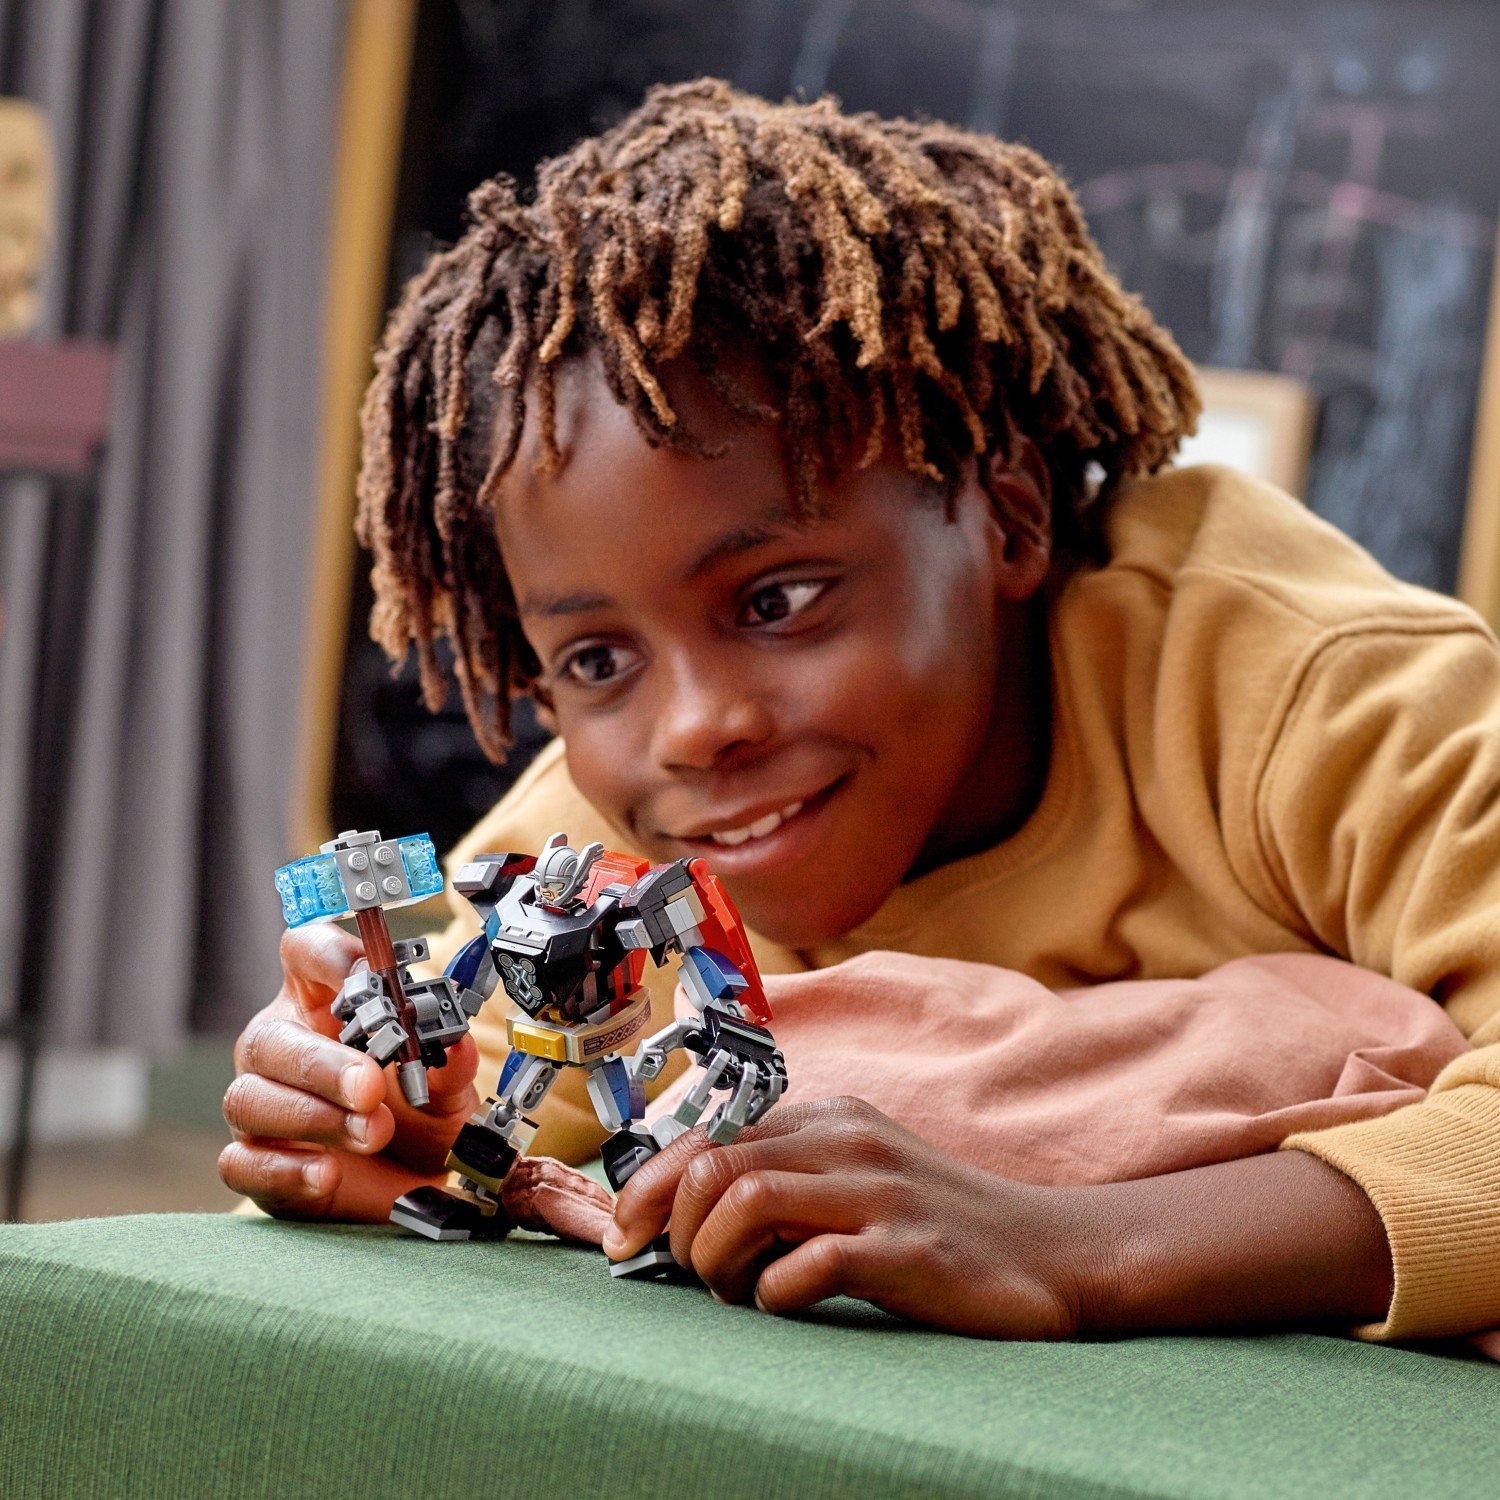 Конструктор LEGO Marvel Super Heroes 76169 Тор робот